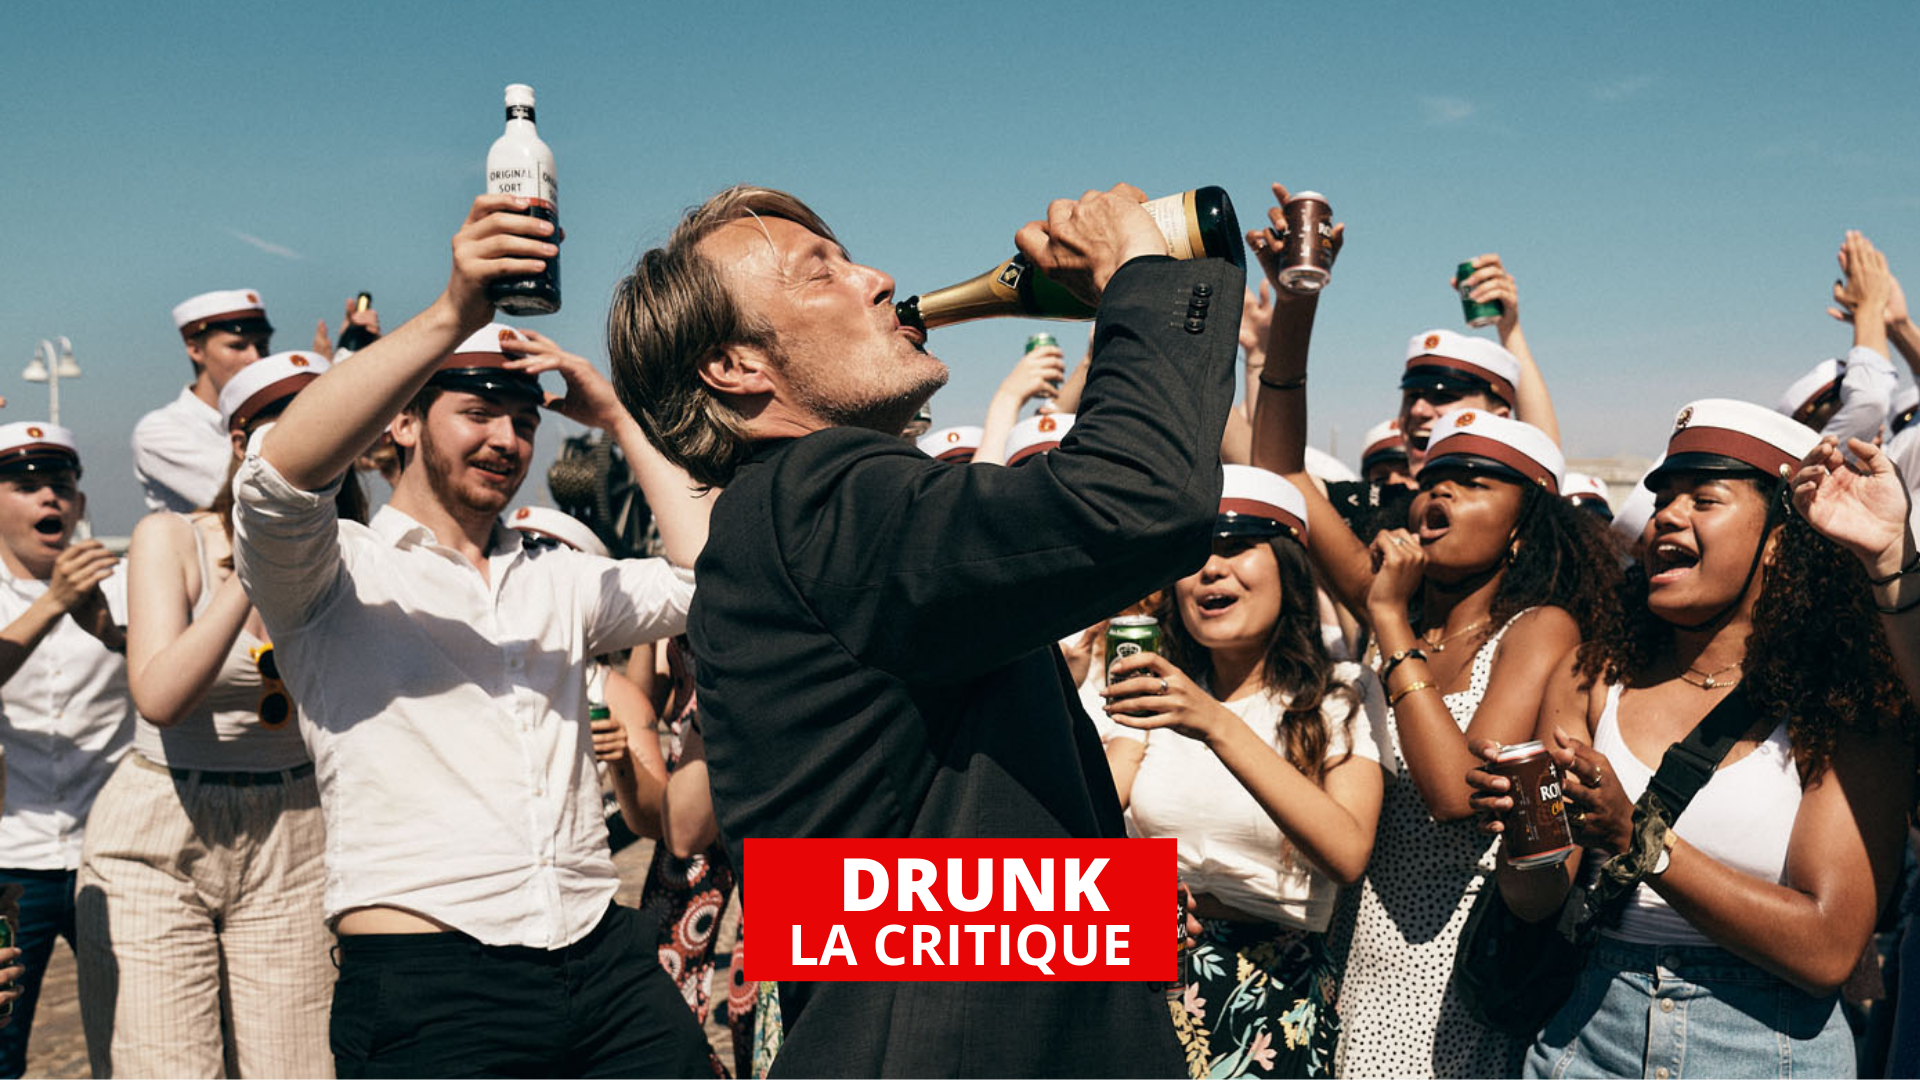 Drunk : l’enivrante euphorie de Thomas Vinterberg